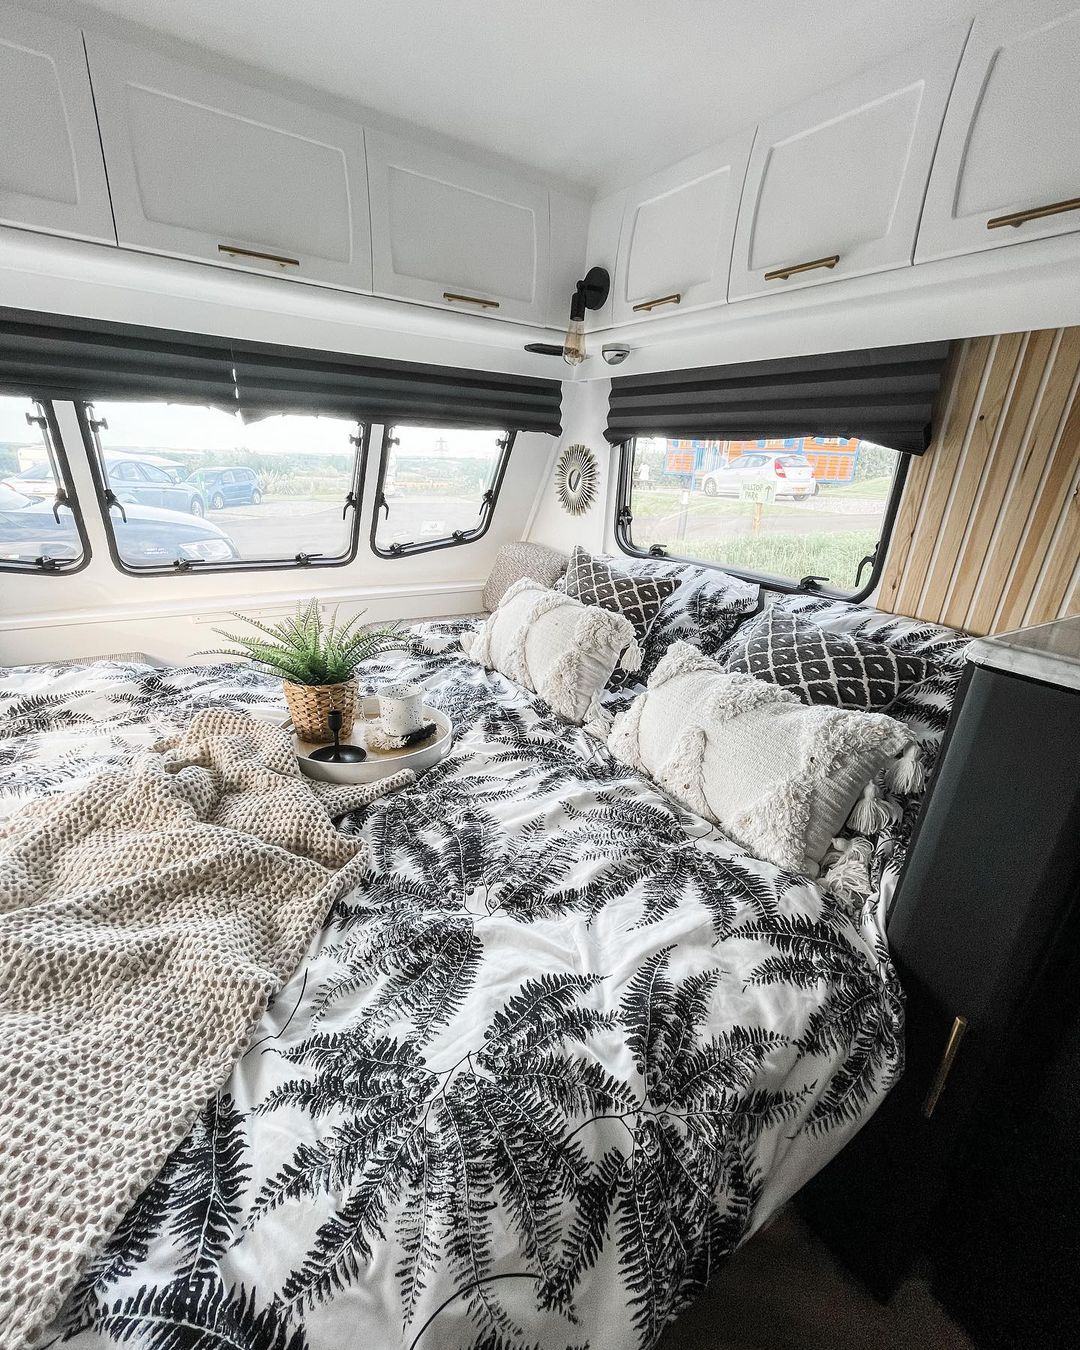 Cozy bed in a caravan with windows surrounding it.